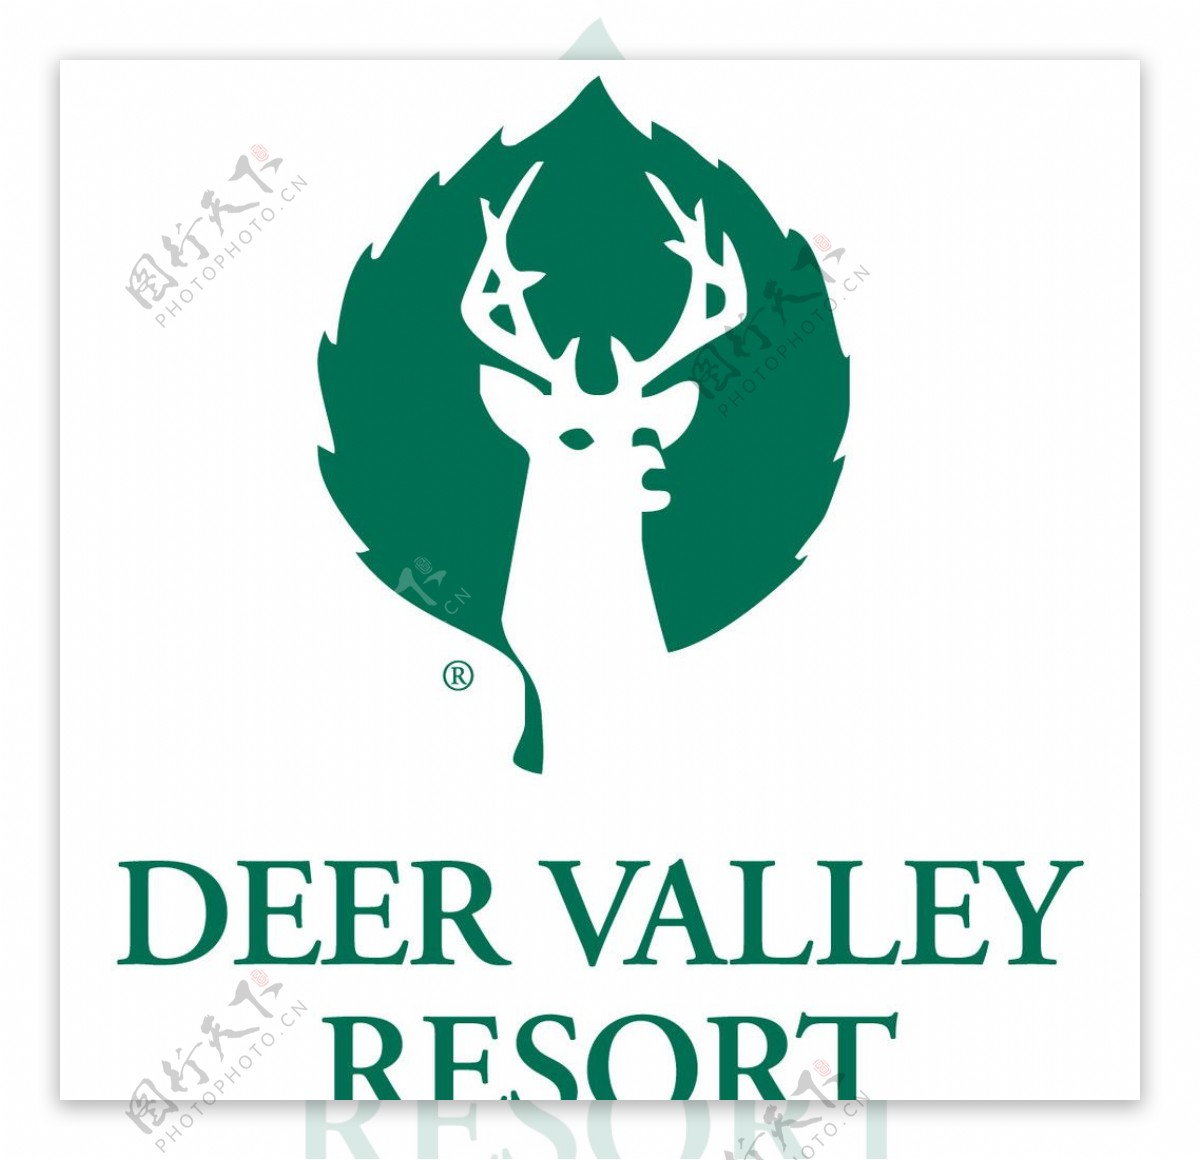 DeerValley标志图片